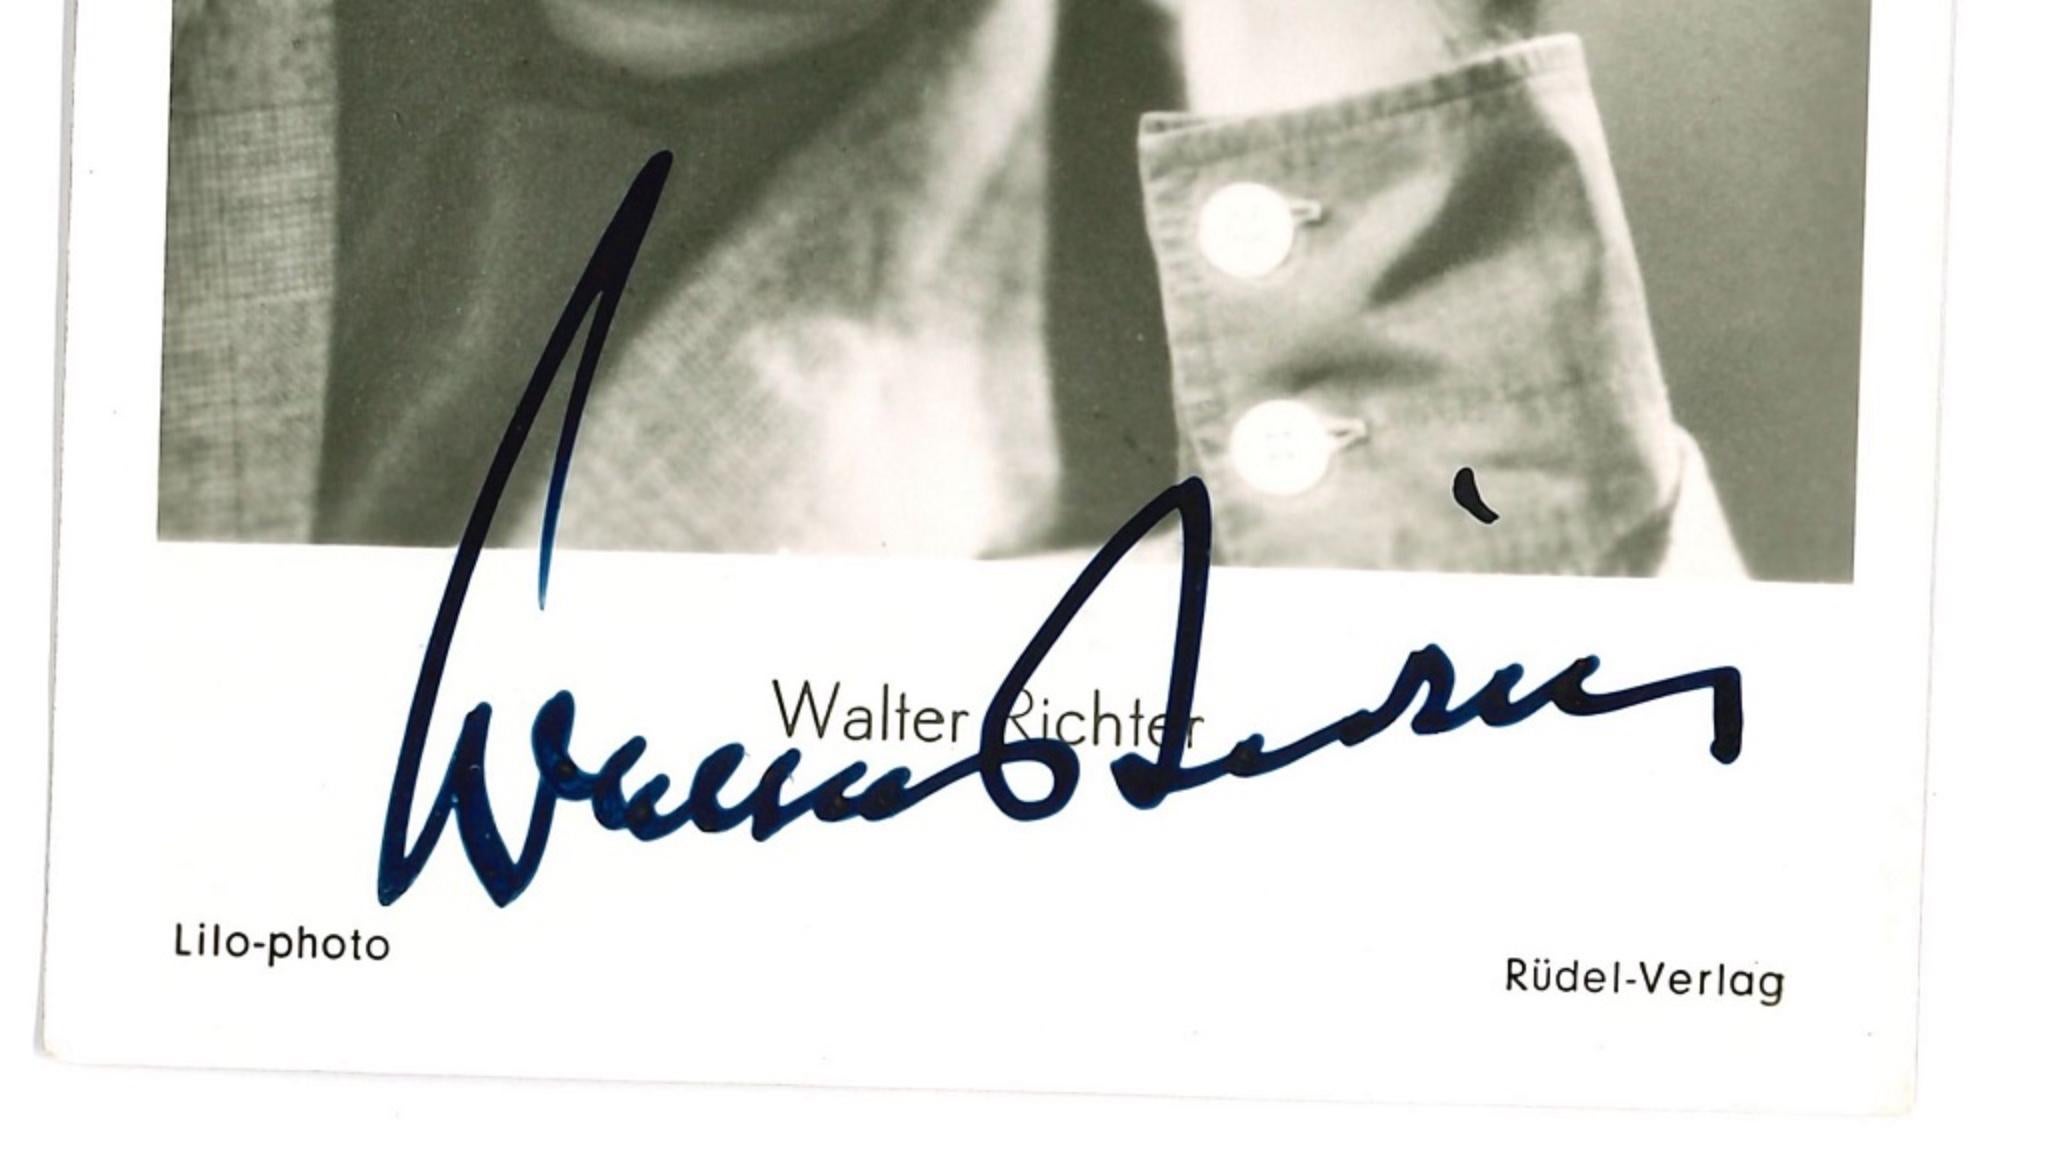 Autographed Portrait of Walter Richter - Vintage b/w Postcard - 1960s - Photograph by Unknown